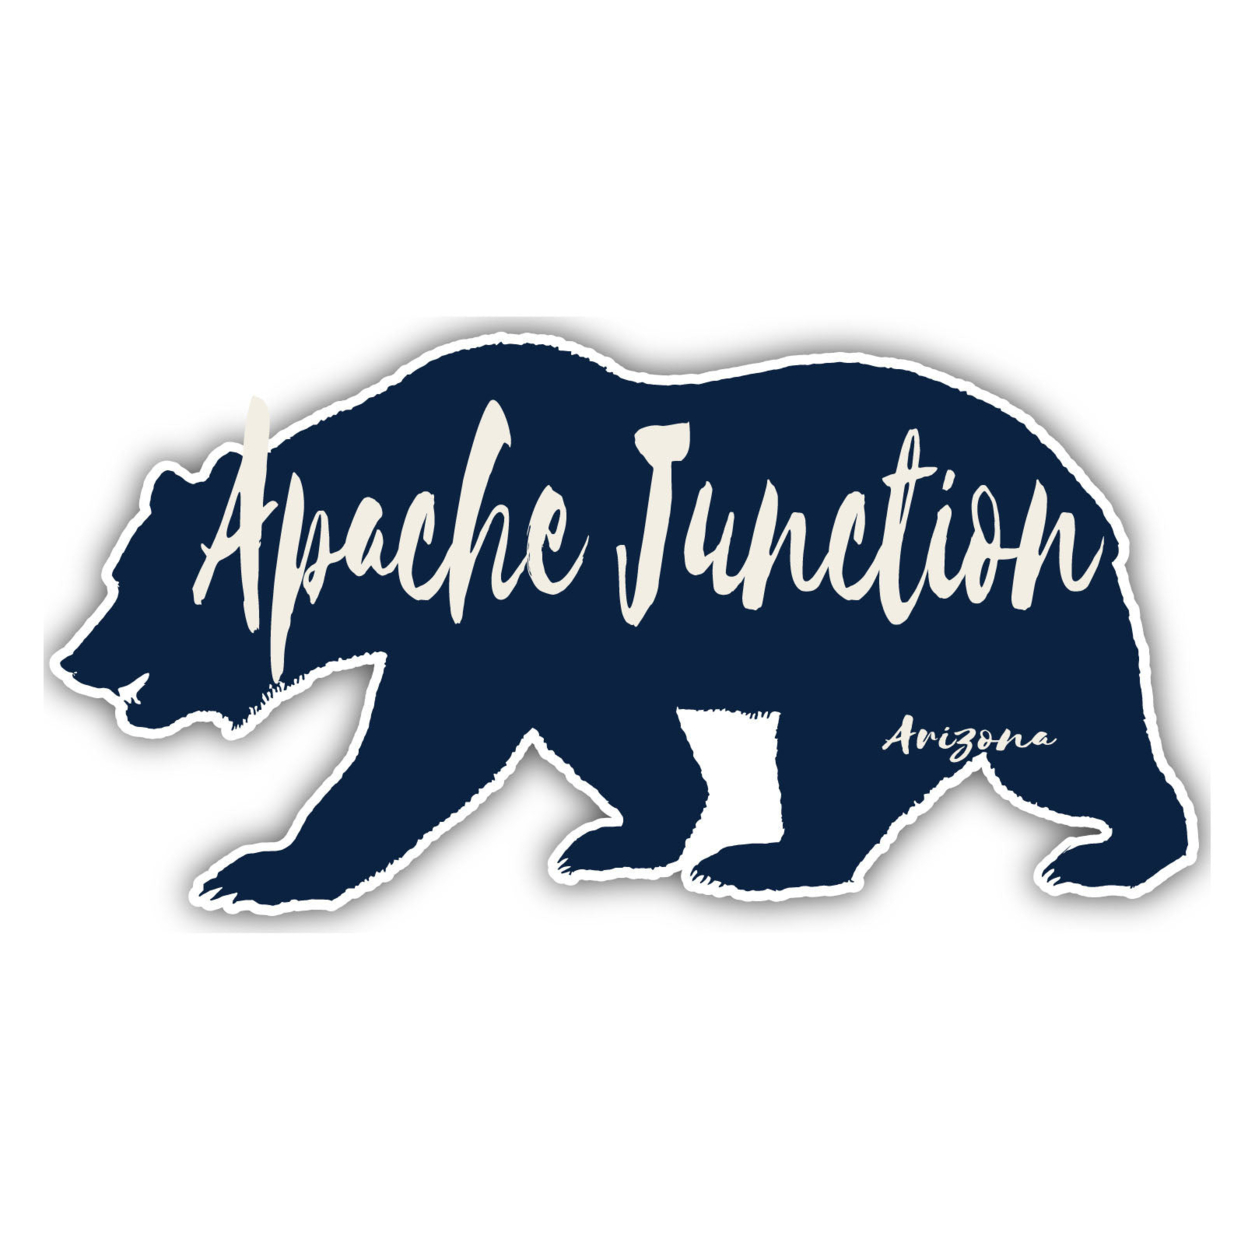 Apache Junction Arizona Souvenir Decorative Stickers (Choose Theme And Size) - Single Unit, 8-Inch, Bear